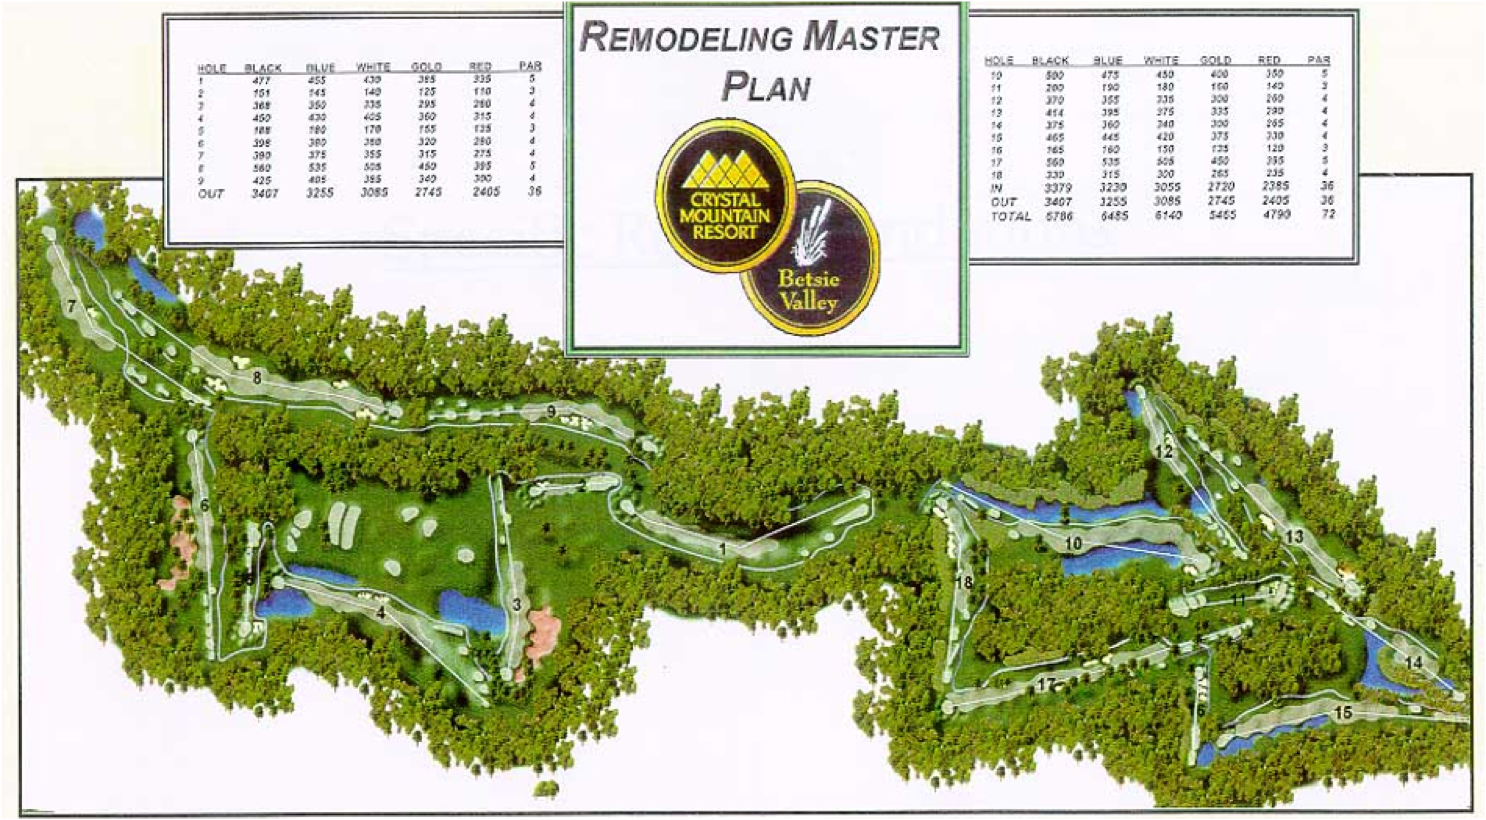 Betsie Valley GC – Crystal Mountain Resort - Raymond Hearn Golf Course